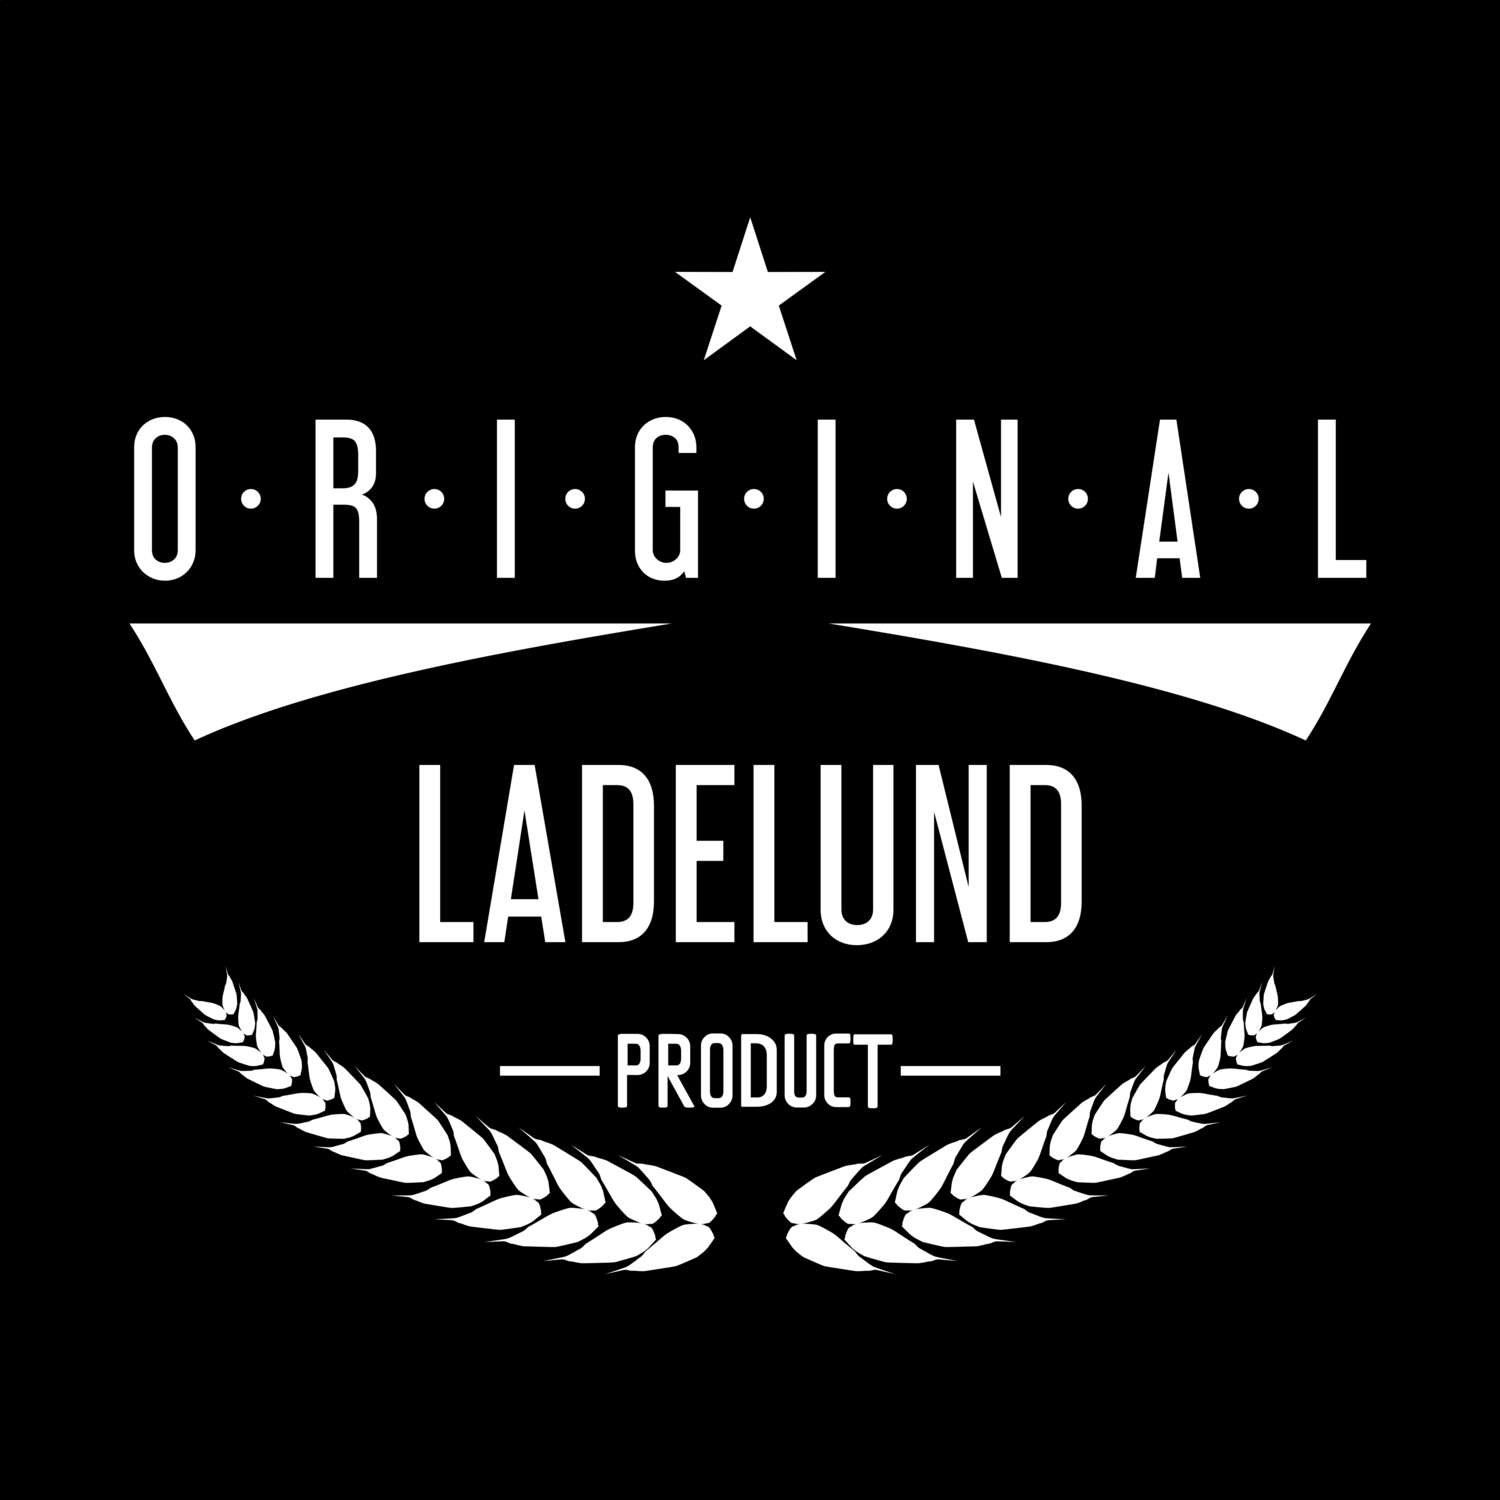 Ladelund T-Shirt »Original Product«